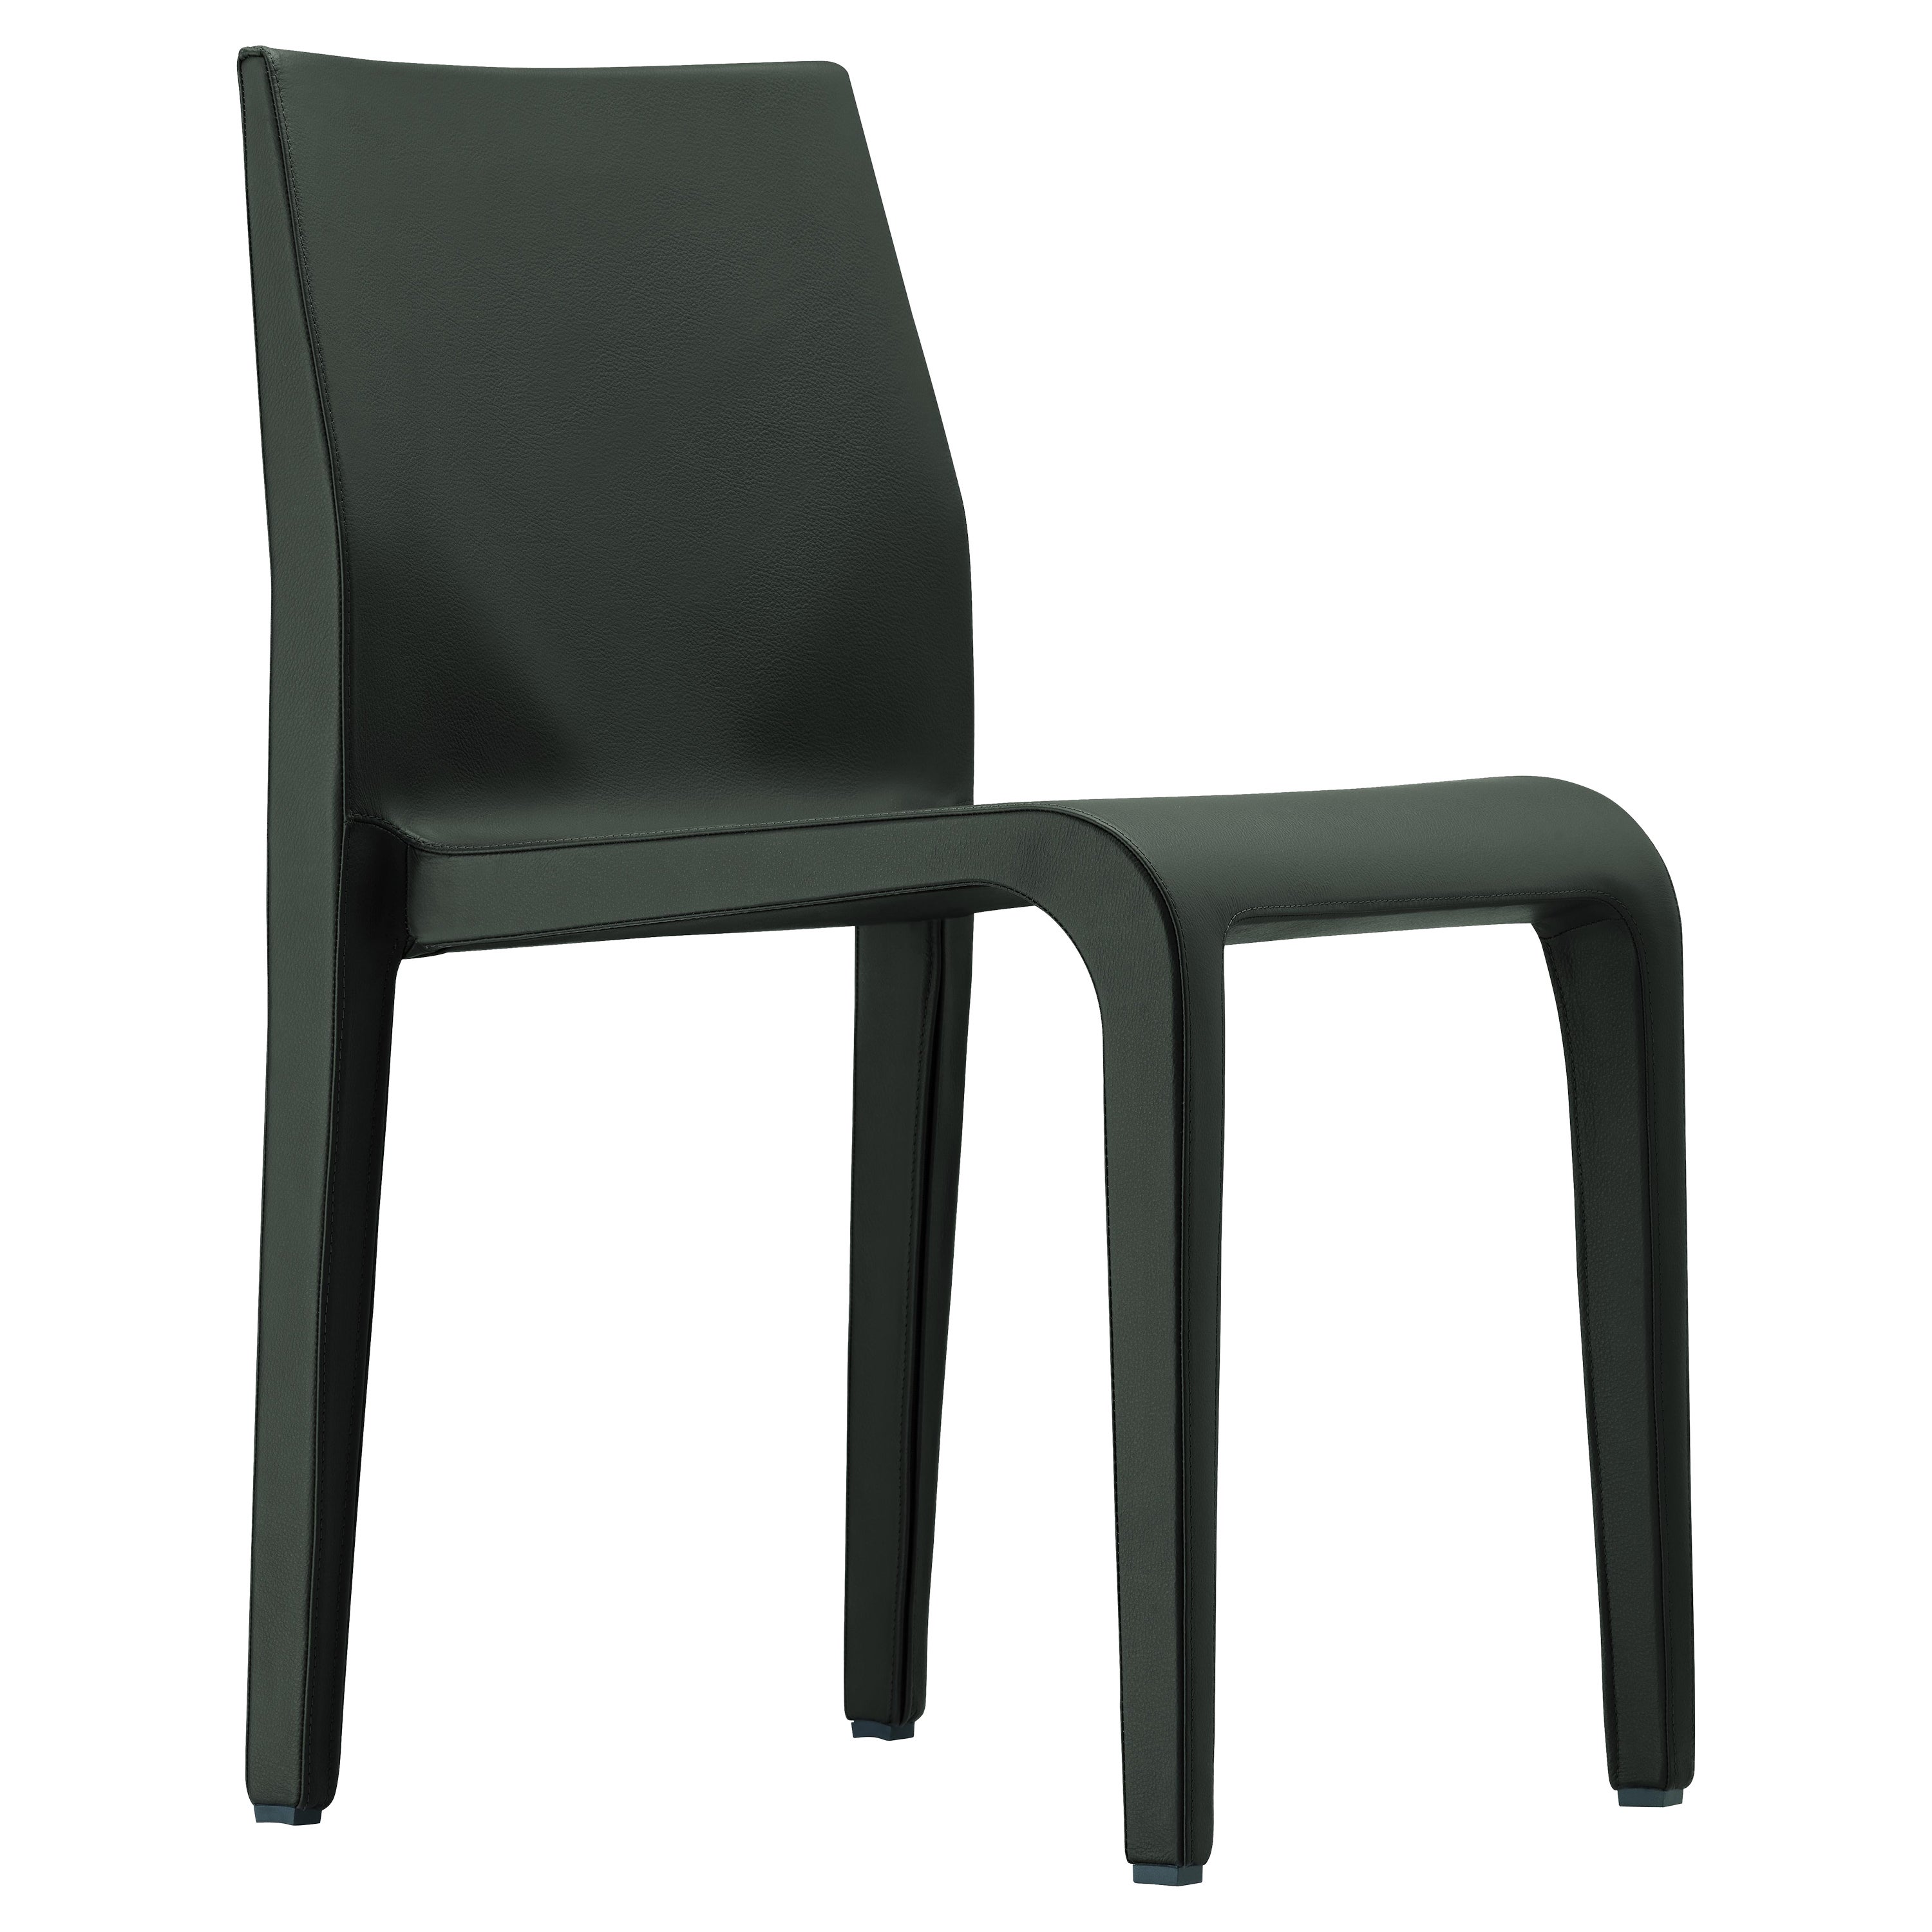 Alias 301 Laleggera Chair in Full Dark Brown Leather by Riccardo Blumer For Sale